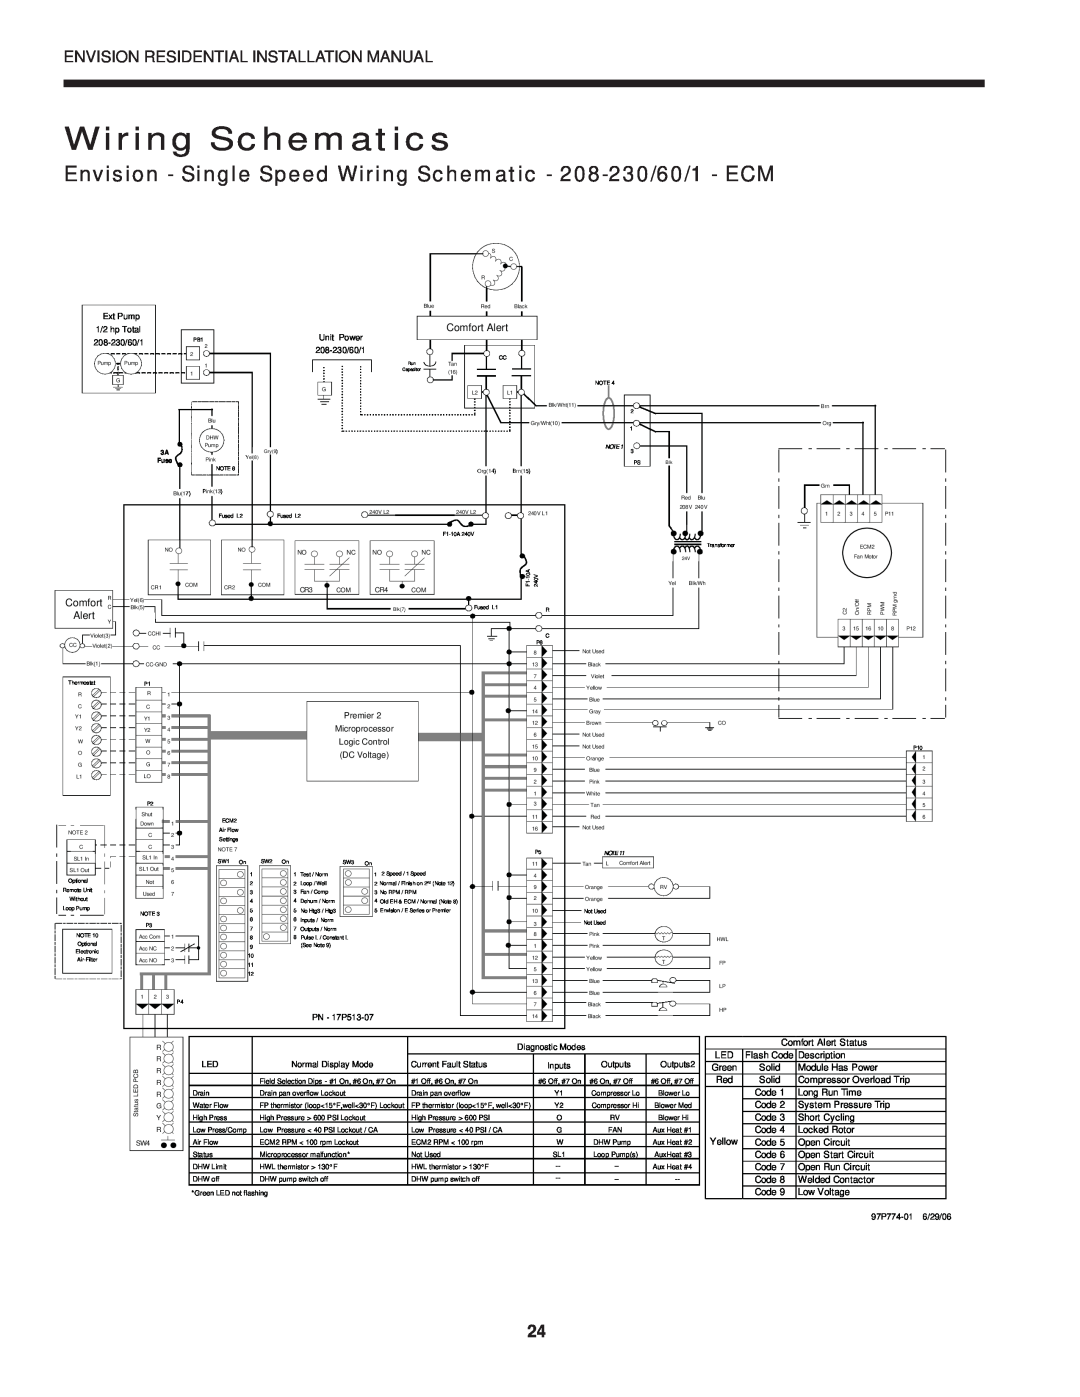 Envision Peripherals R-410A installation manual Wiring Schematics, Ext Pump 